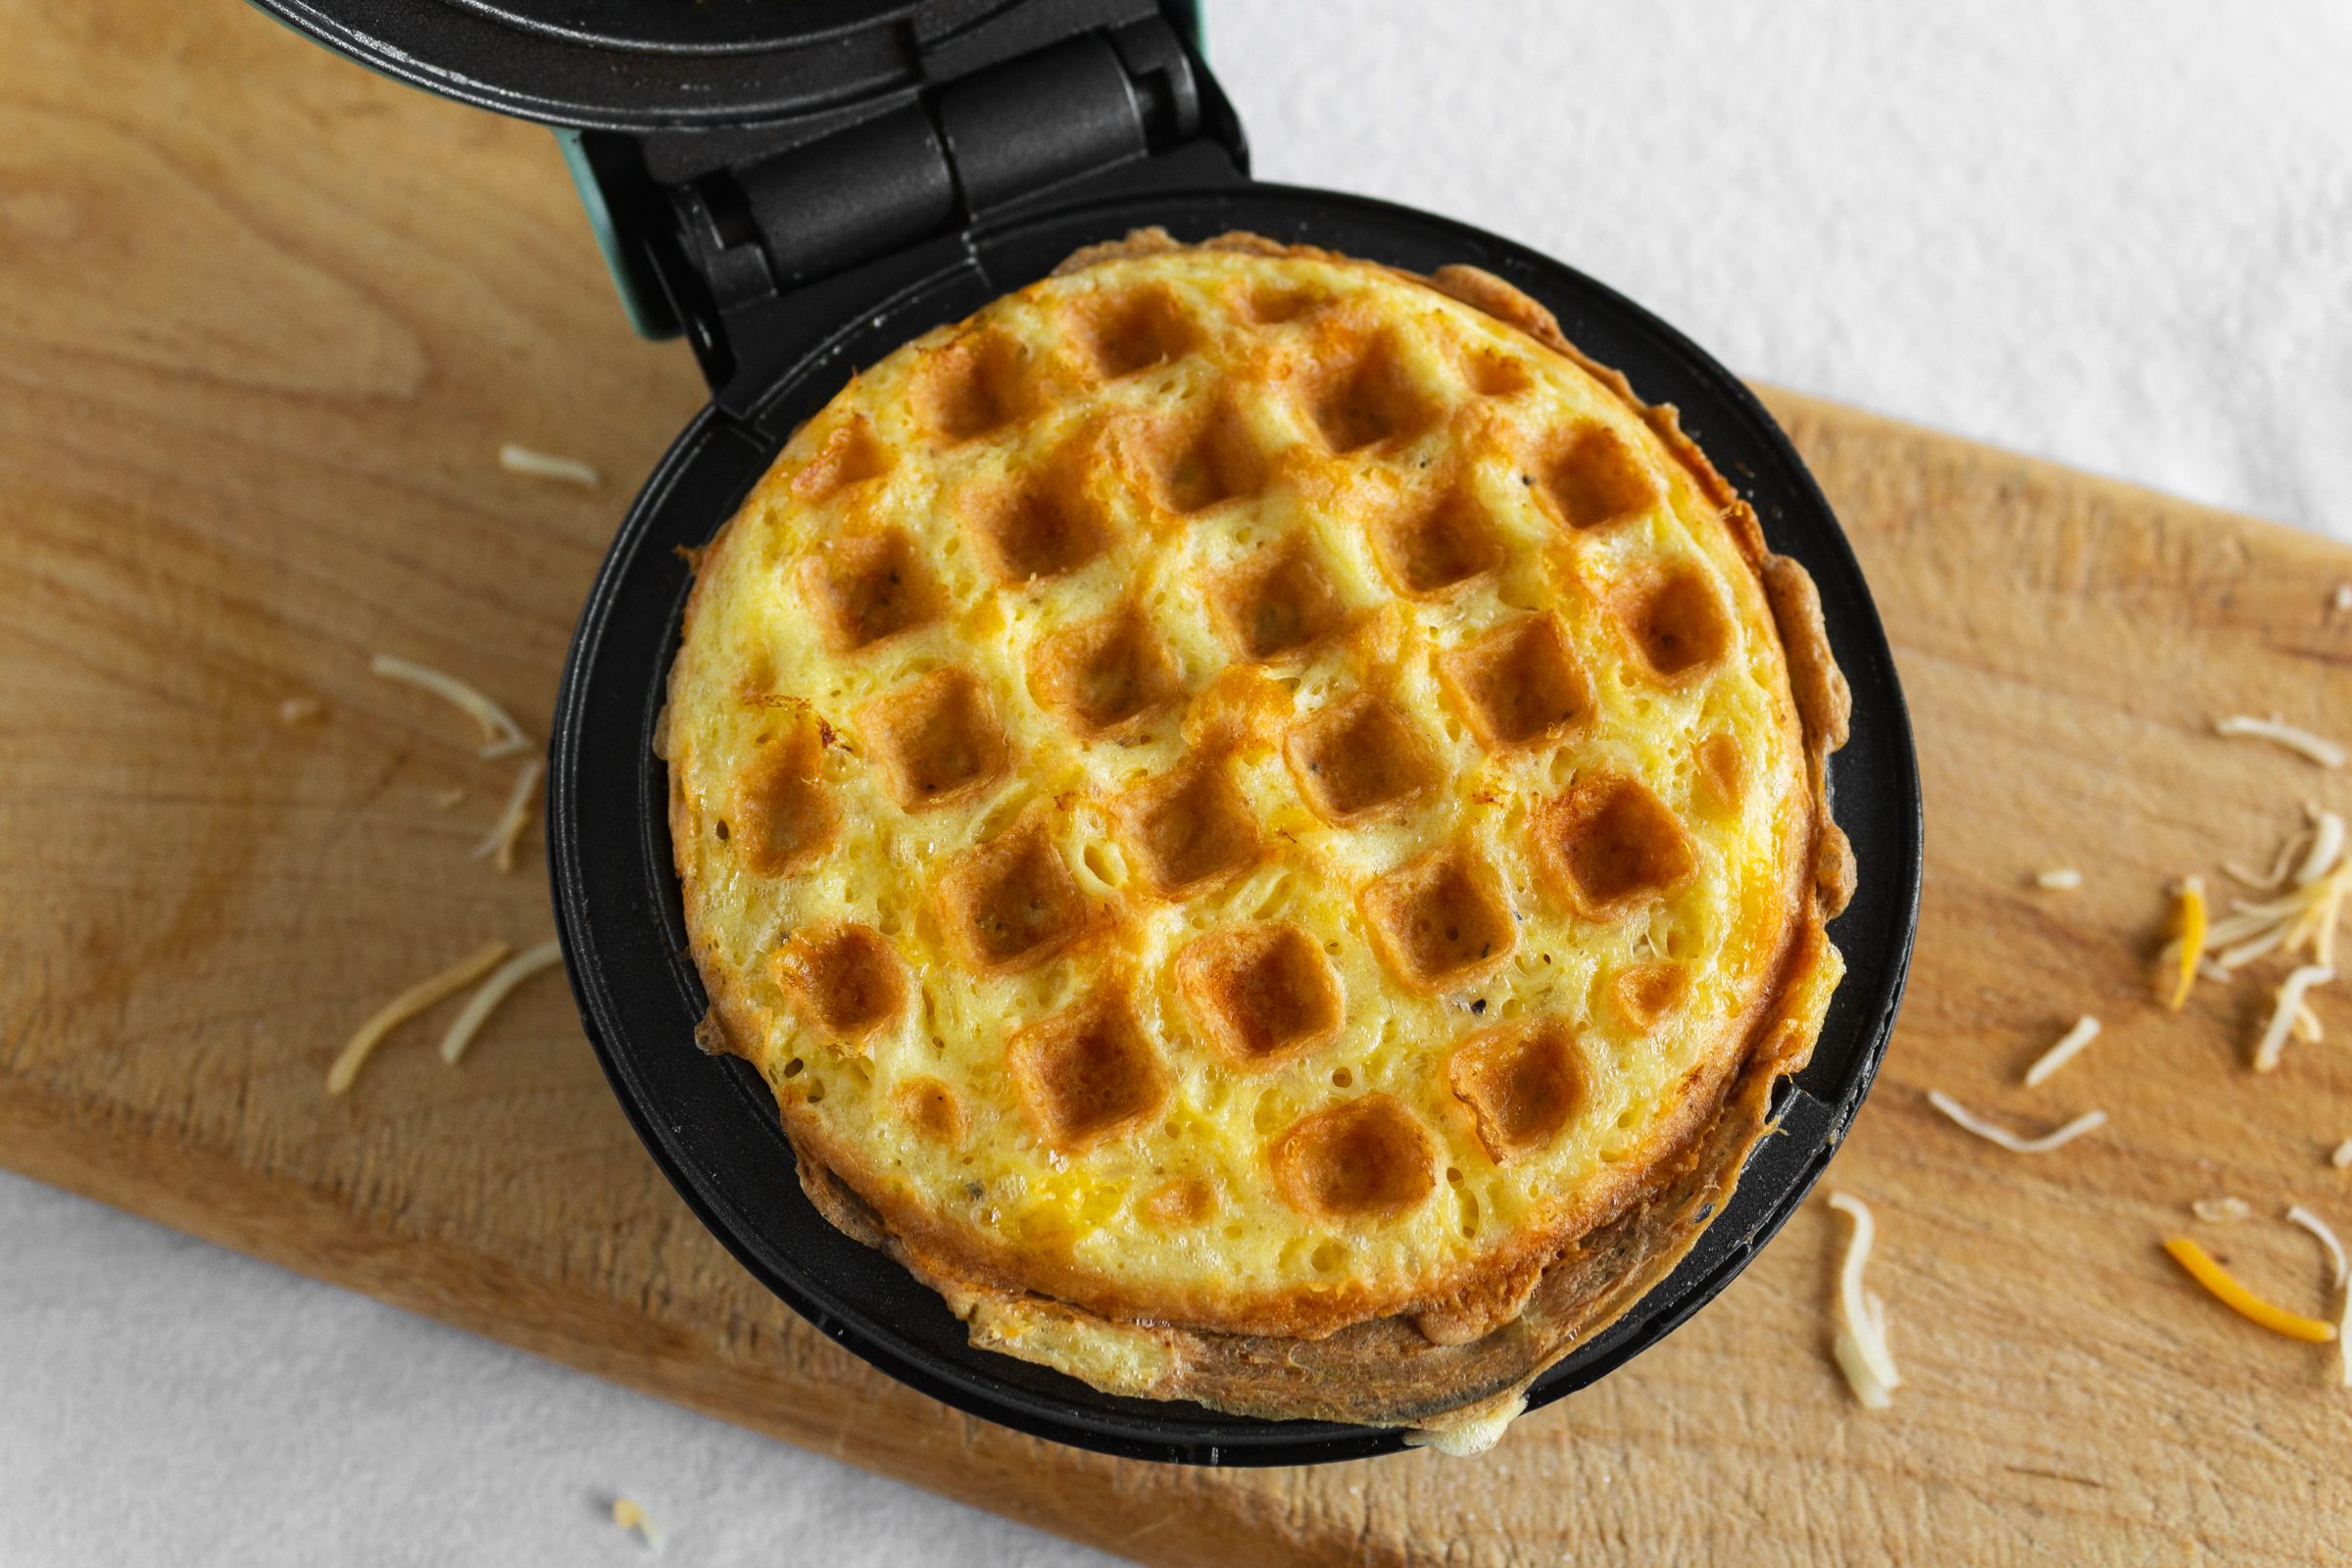 https://www.tasteofhome.com/wp-content/uploads/2021/12/cooked-chaffle-in-waffle-maker_nancy-mock.jpg?fit=680%2C454